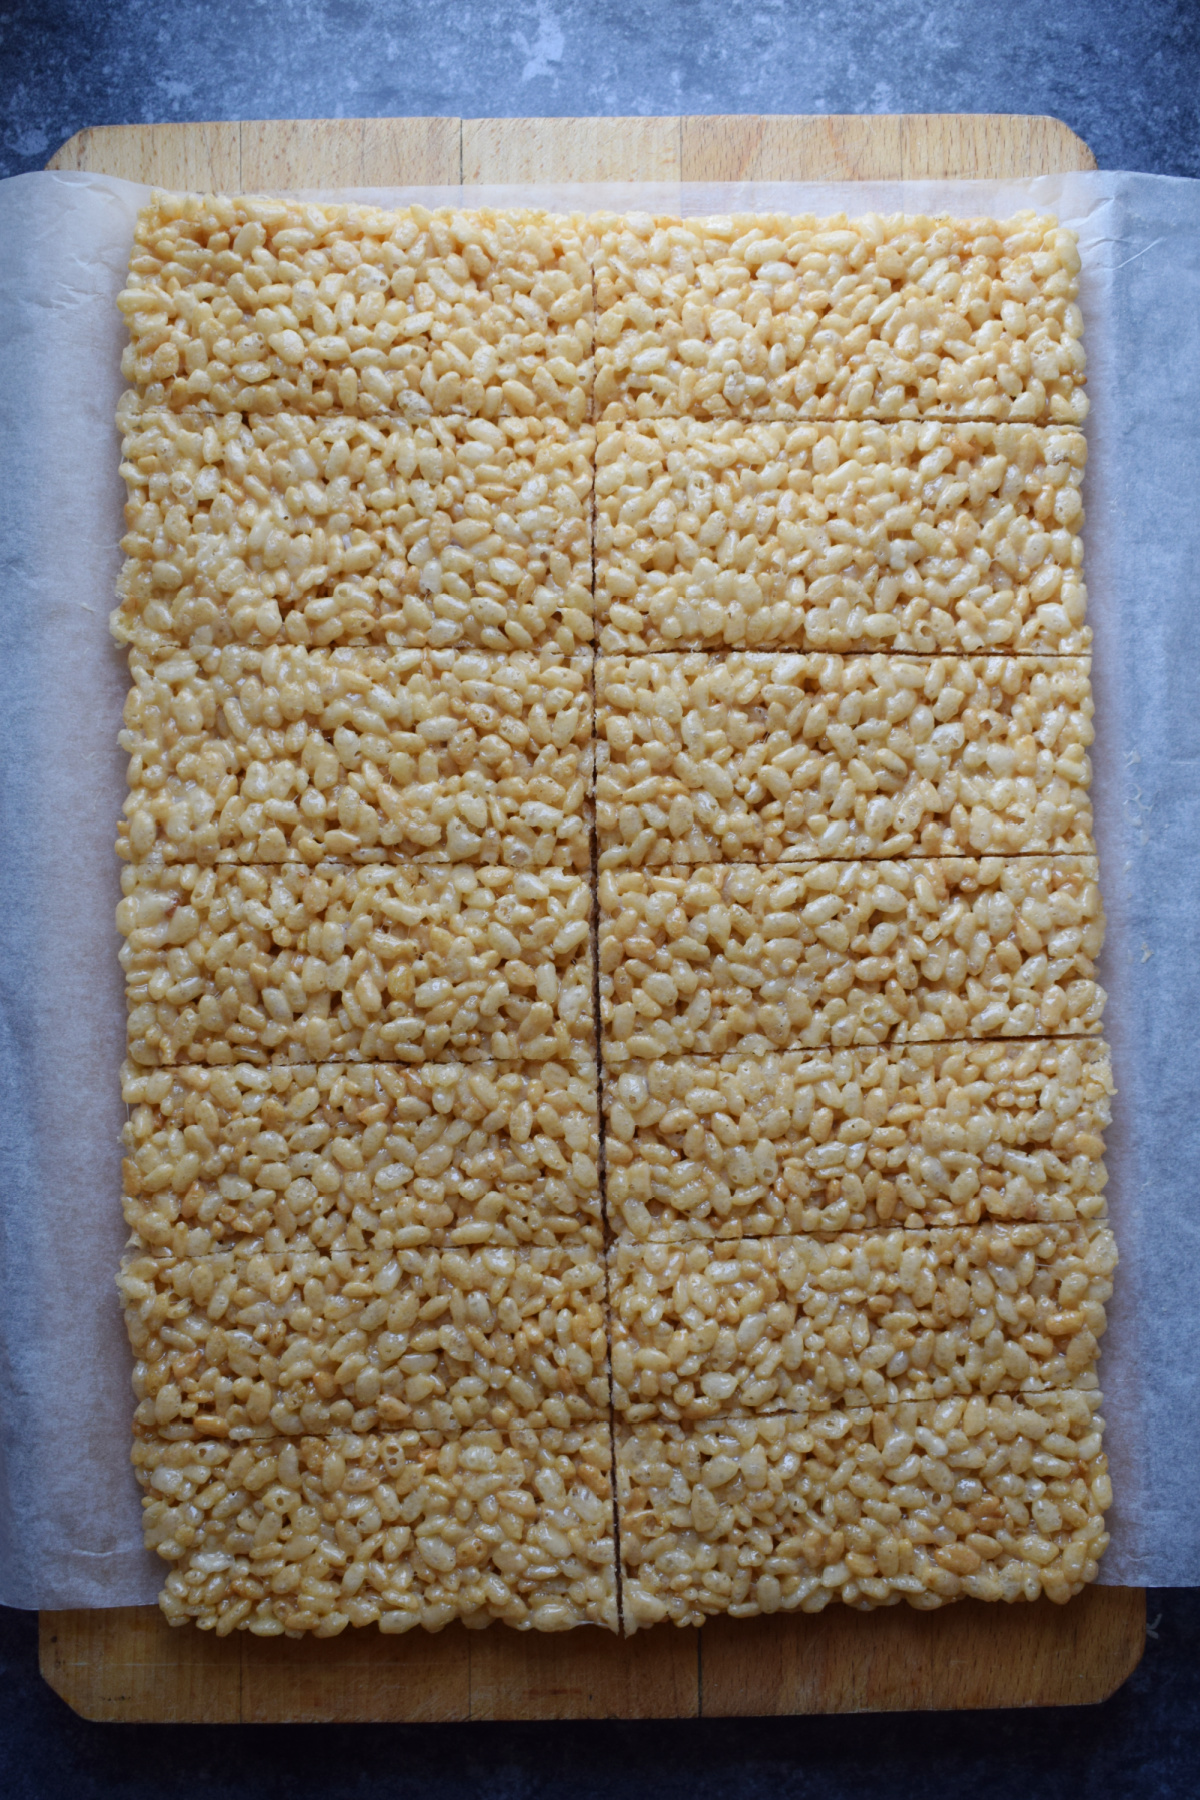 Rice krispie treats cut into rectangles.